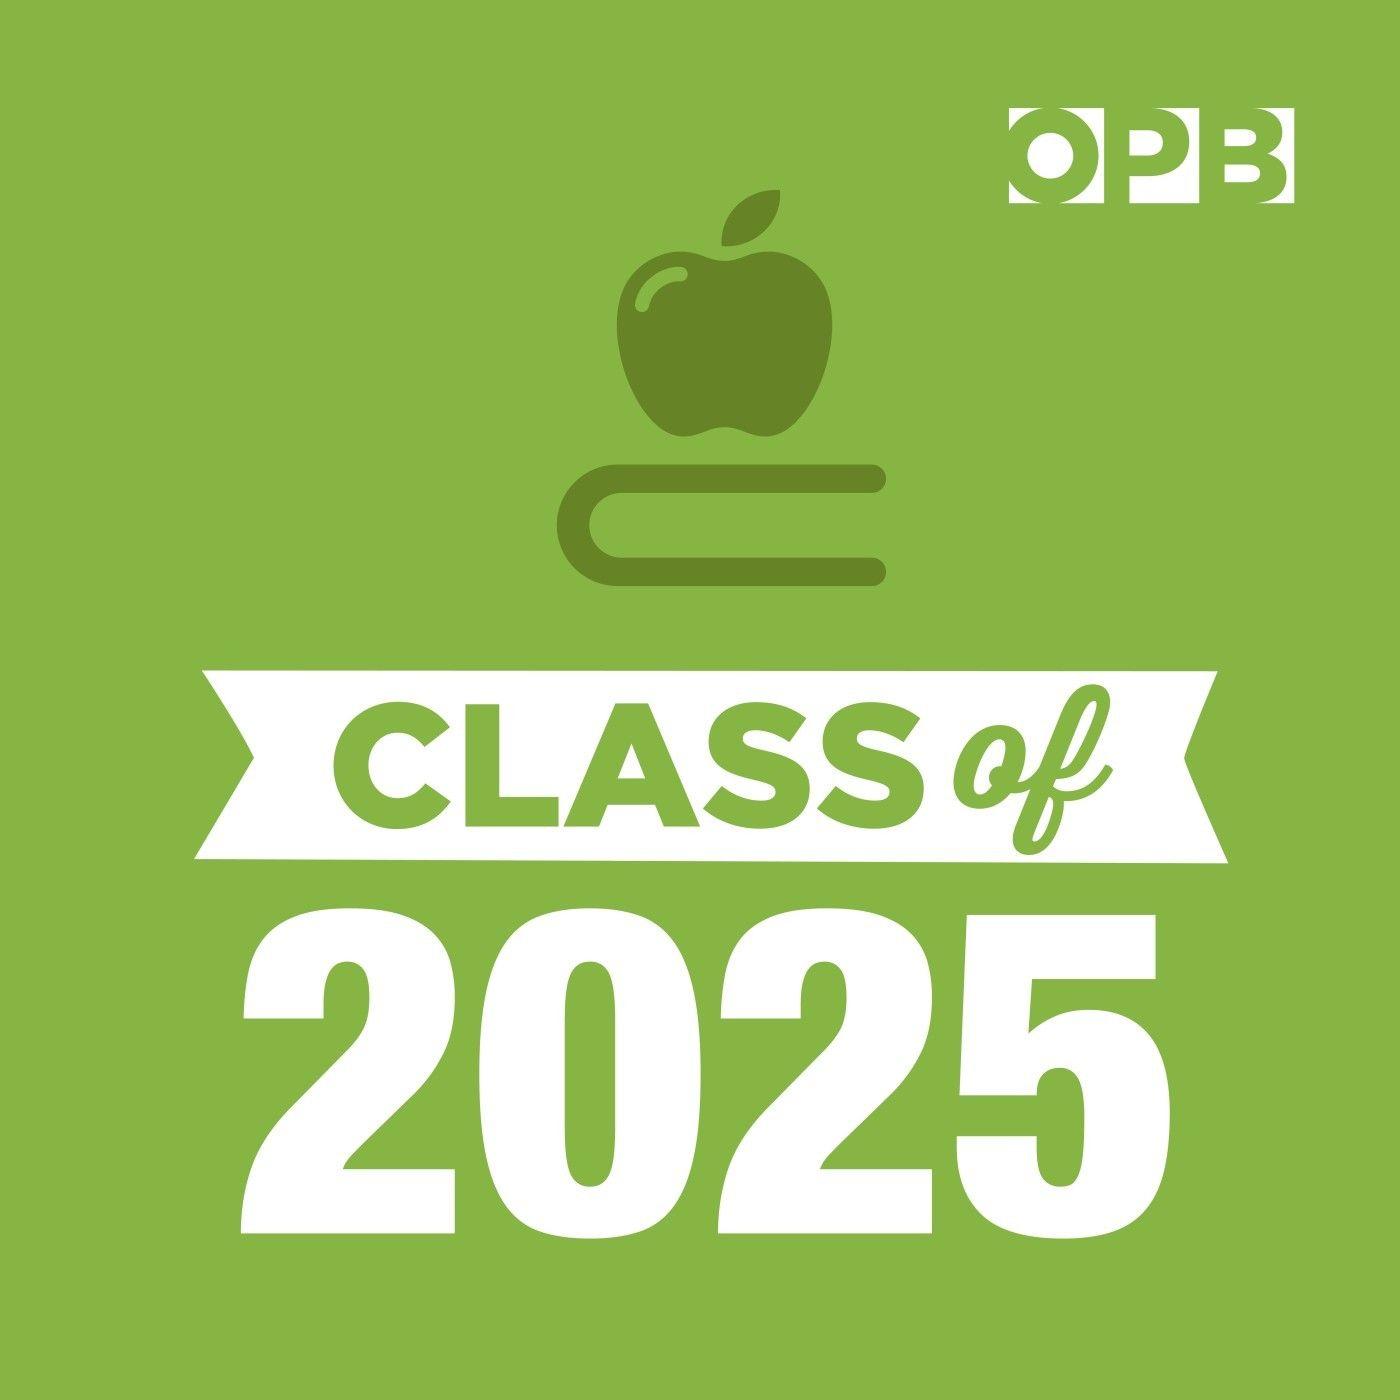 KOPB Logo - OPB's Class of 2025